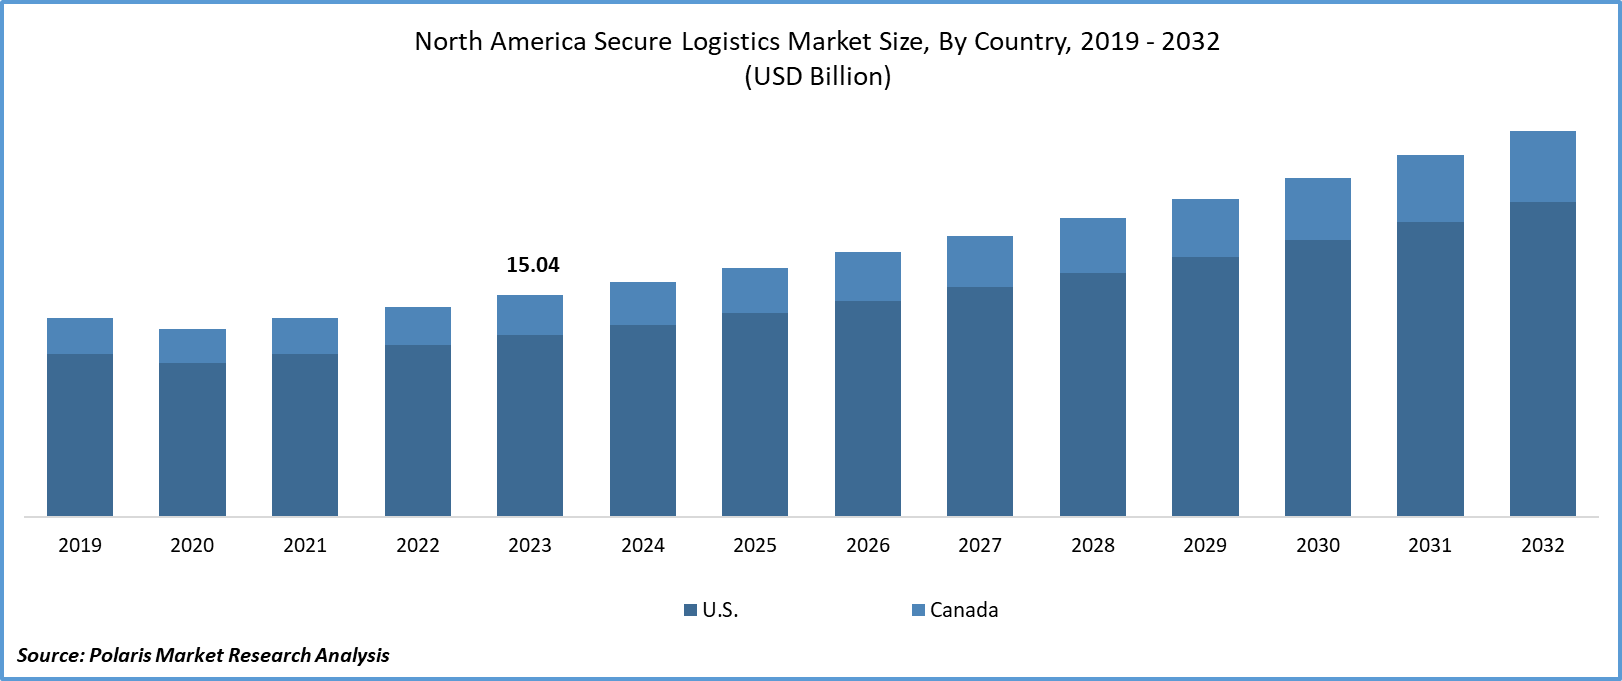 North America Secure Logistics Market Size